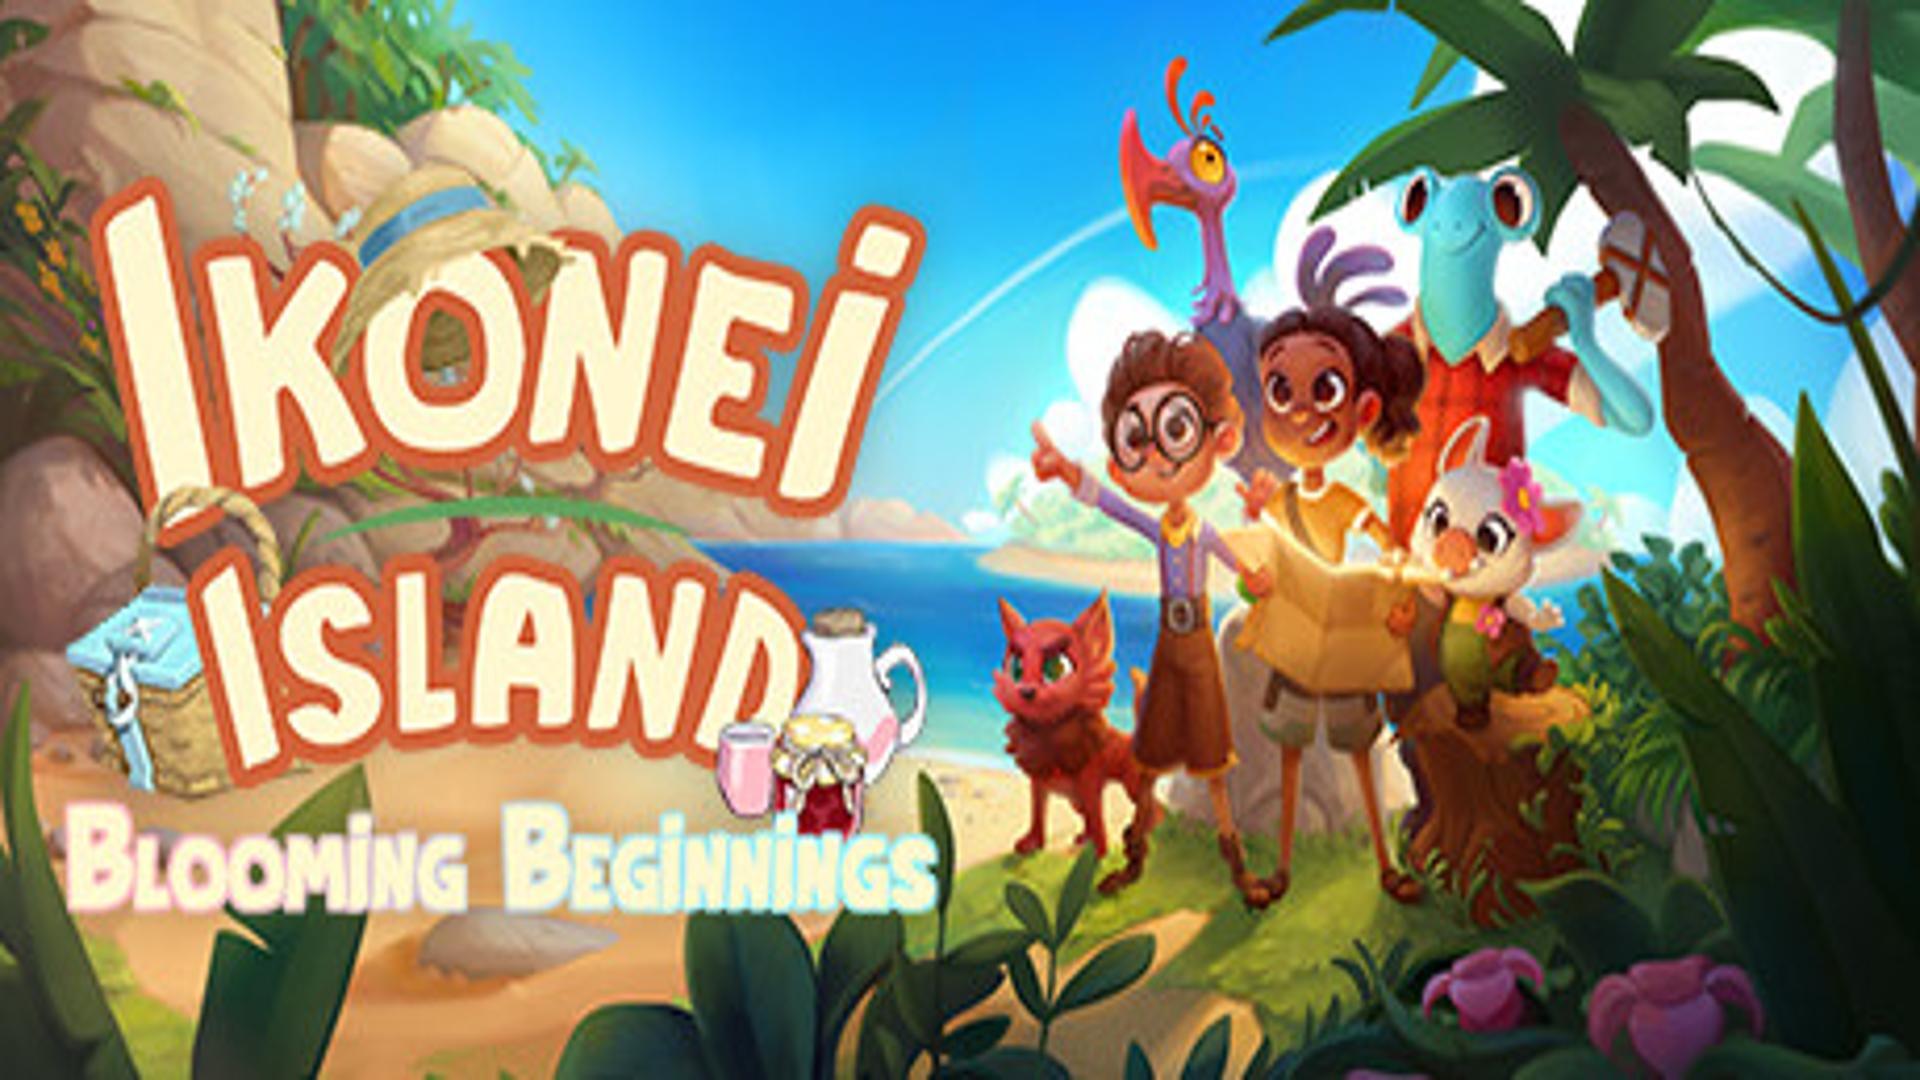 Ikonei Island: An Earthlock Adventure +All DLC – Free Download (Build 13750372)